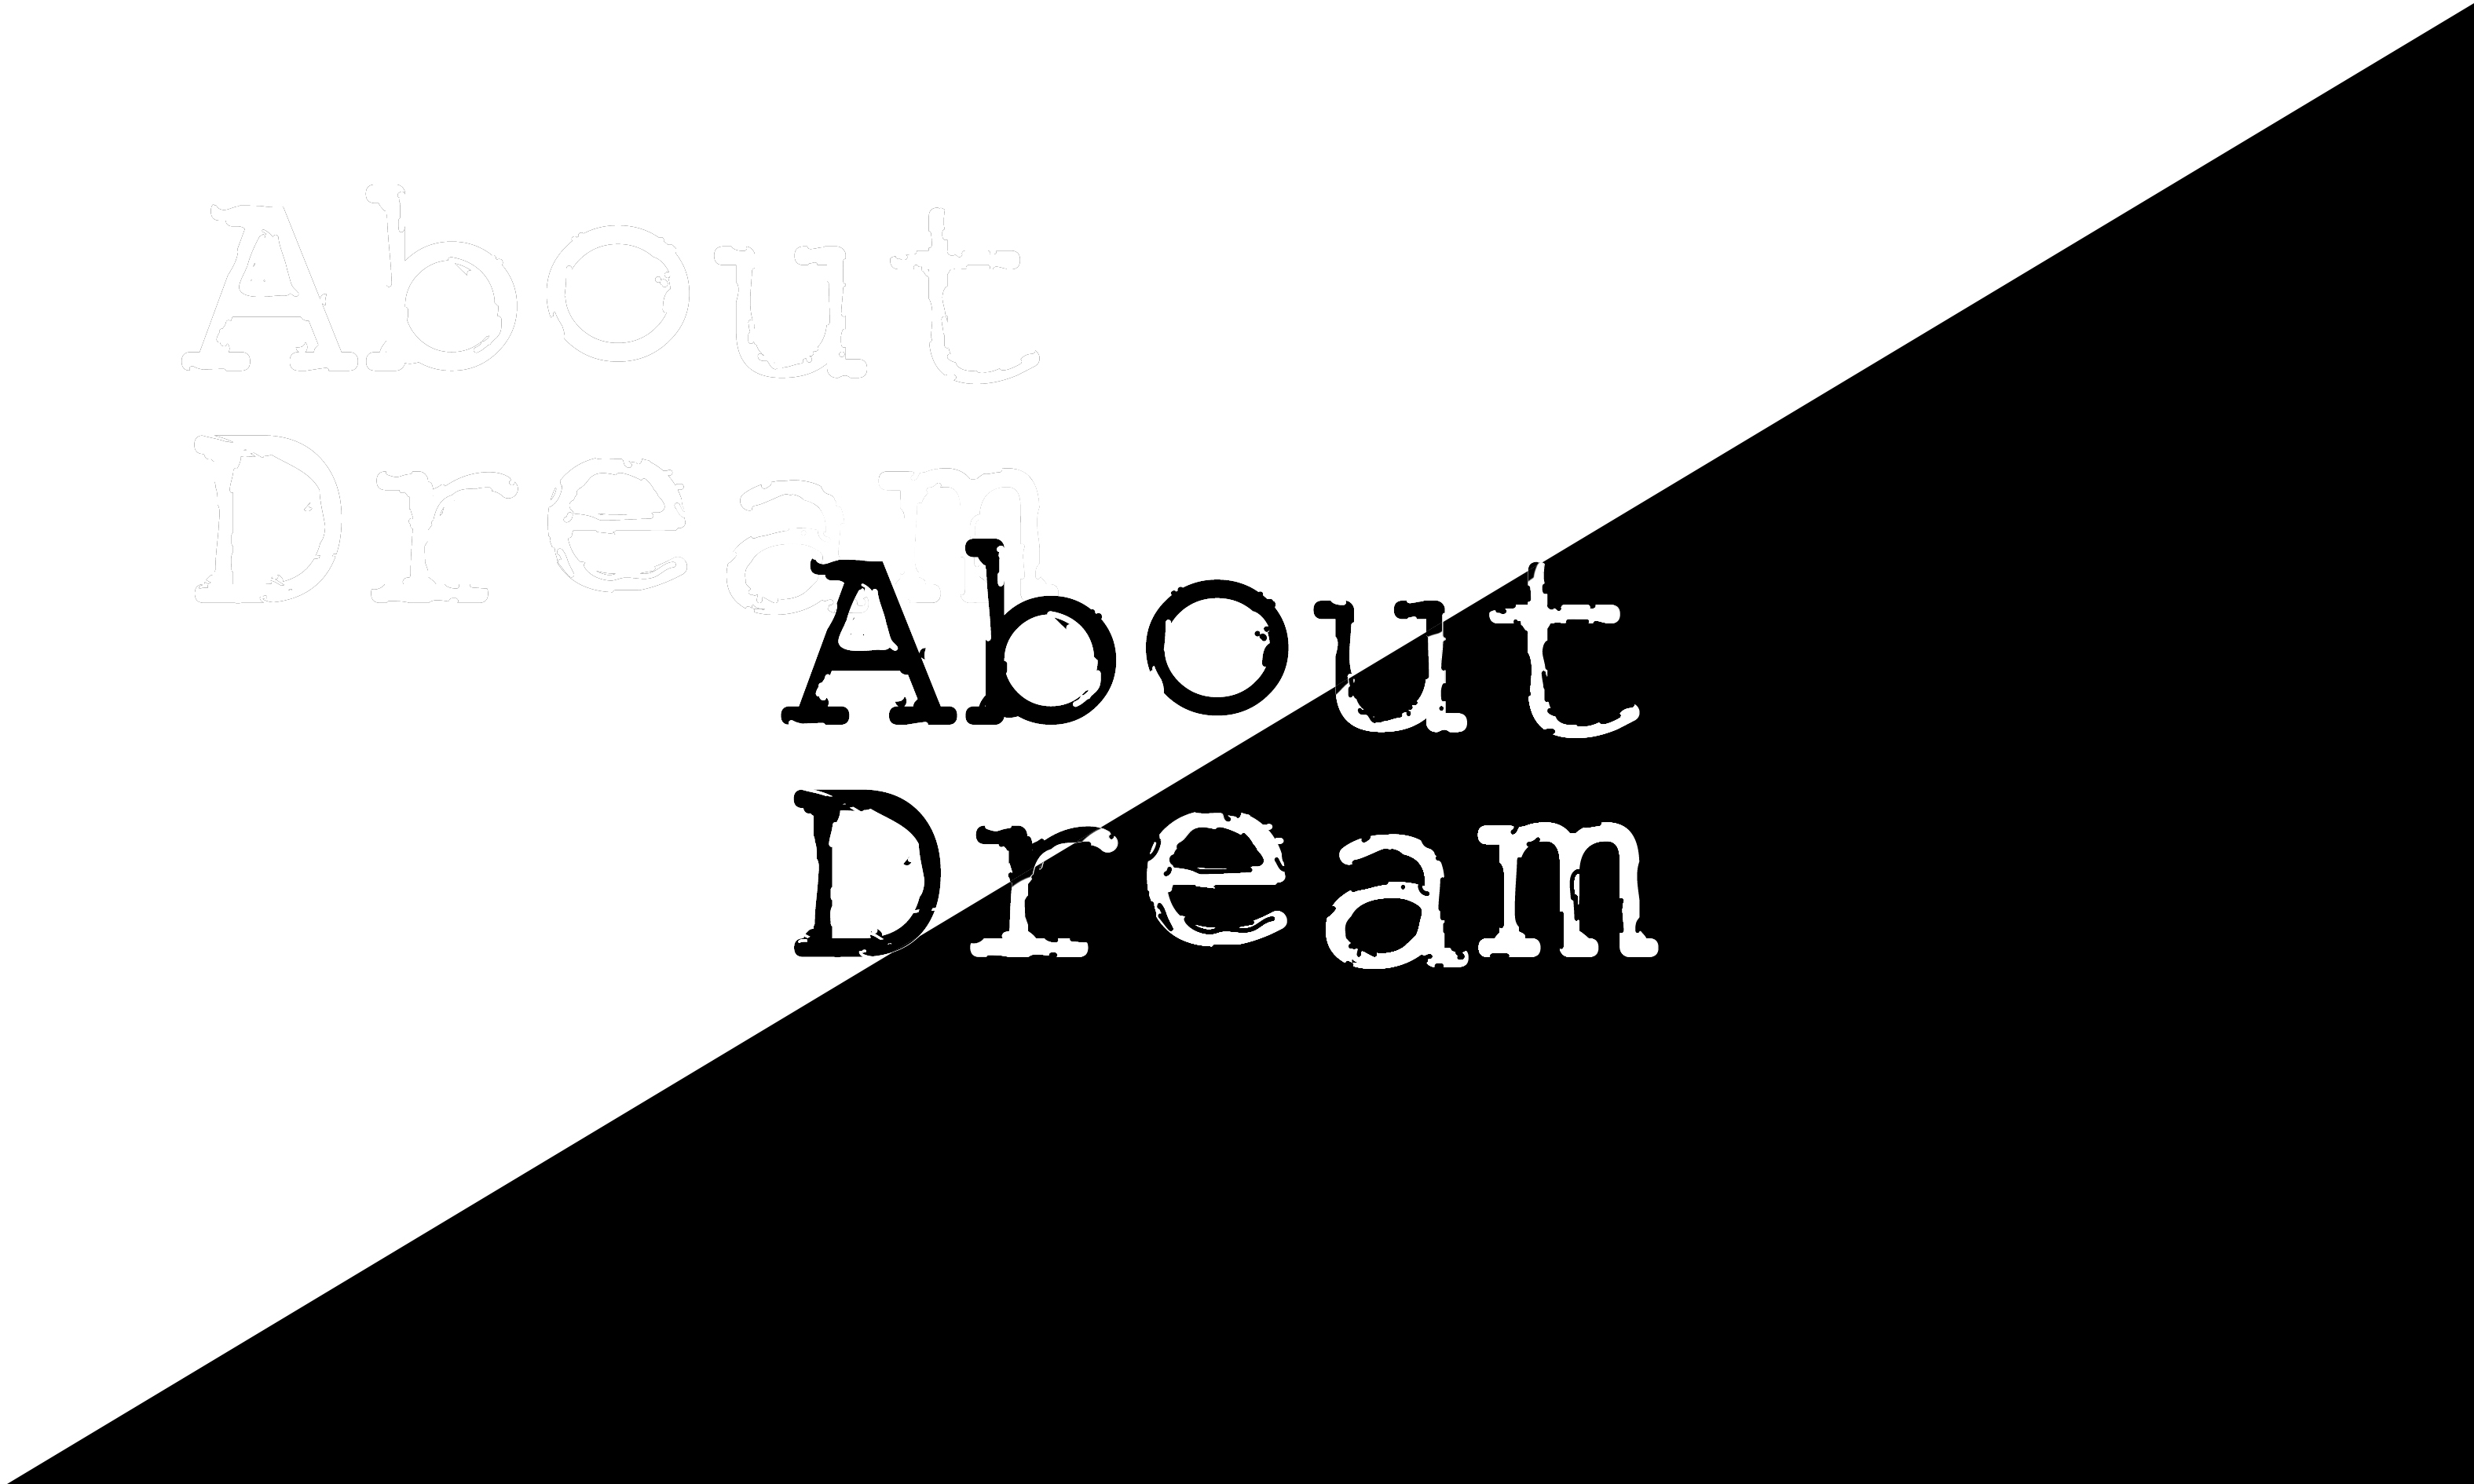 About Dream 關於夢想